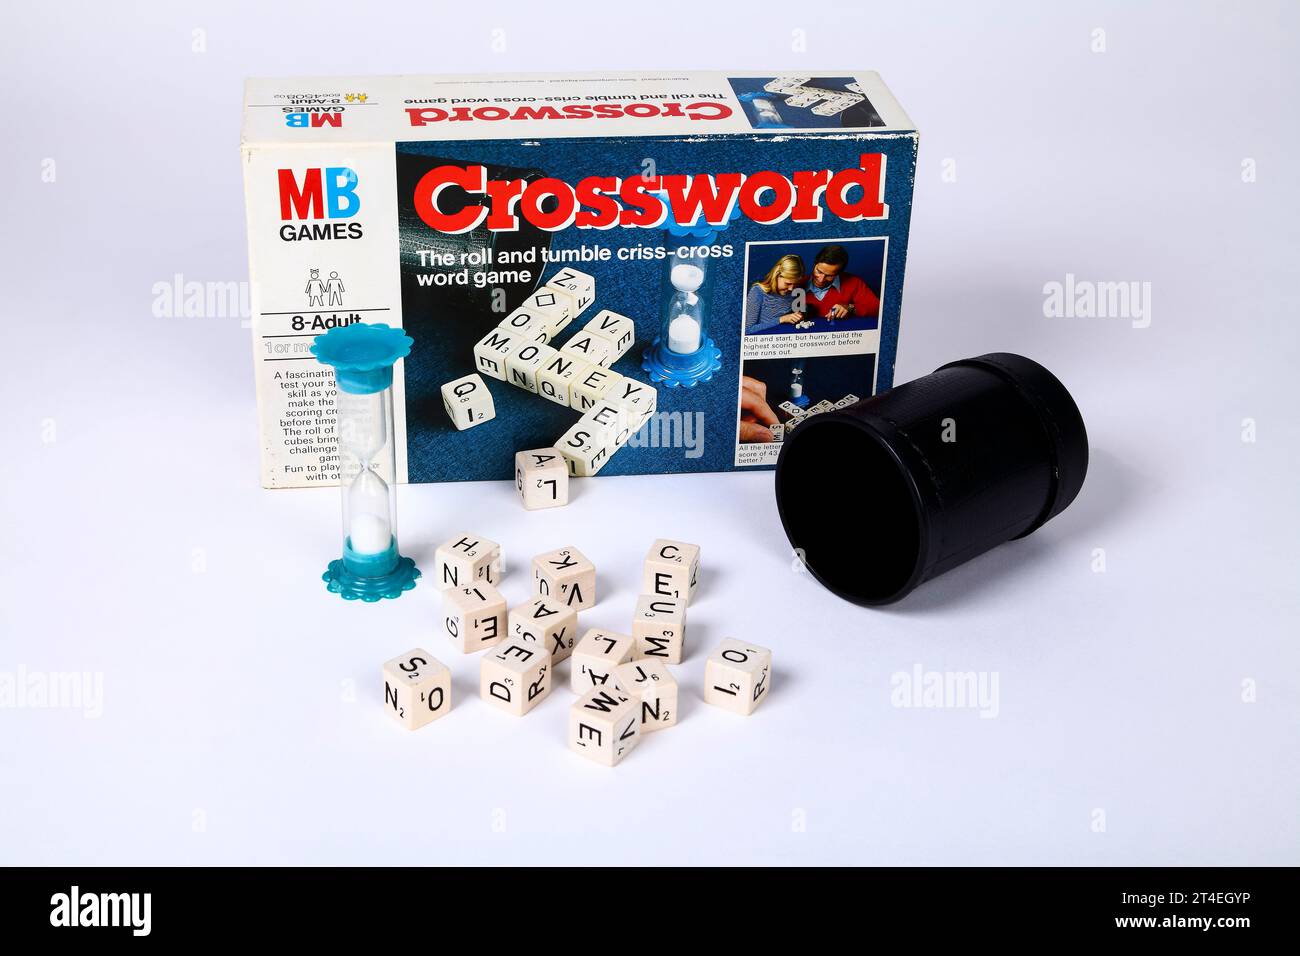 MB Games Crossword family game circa 1978 Stock Photo